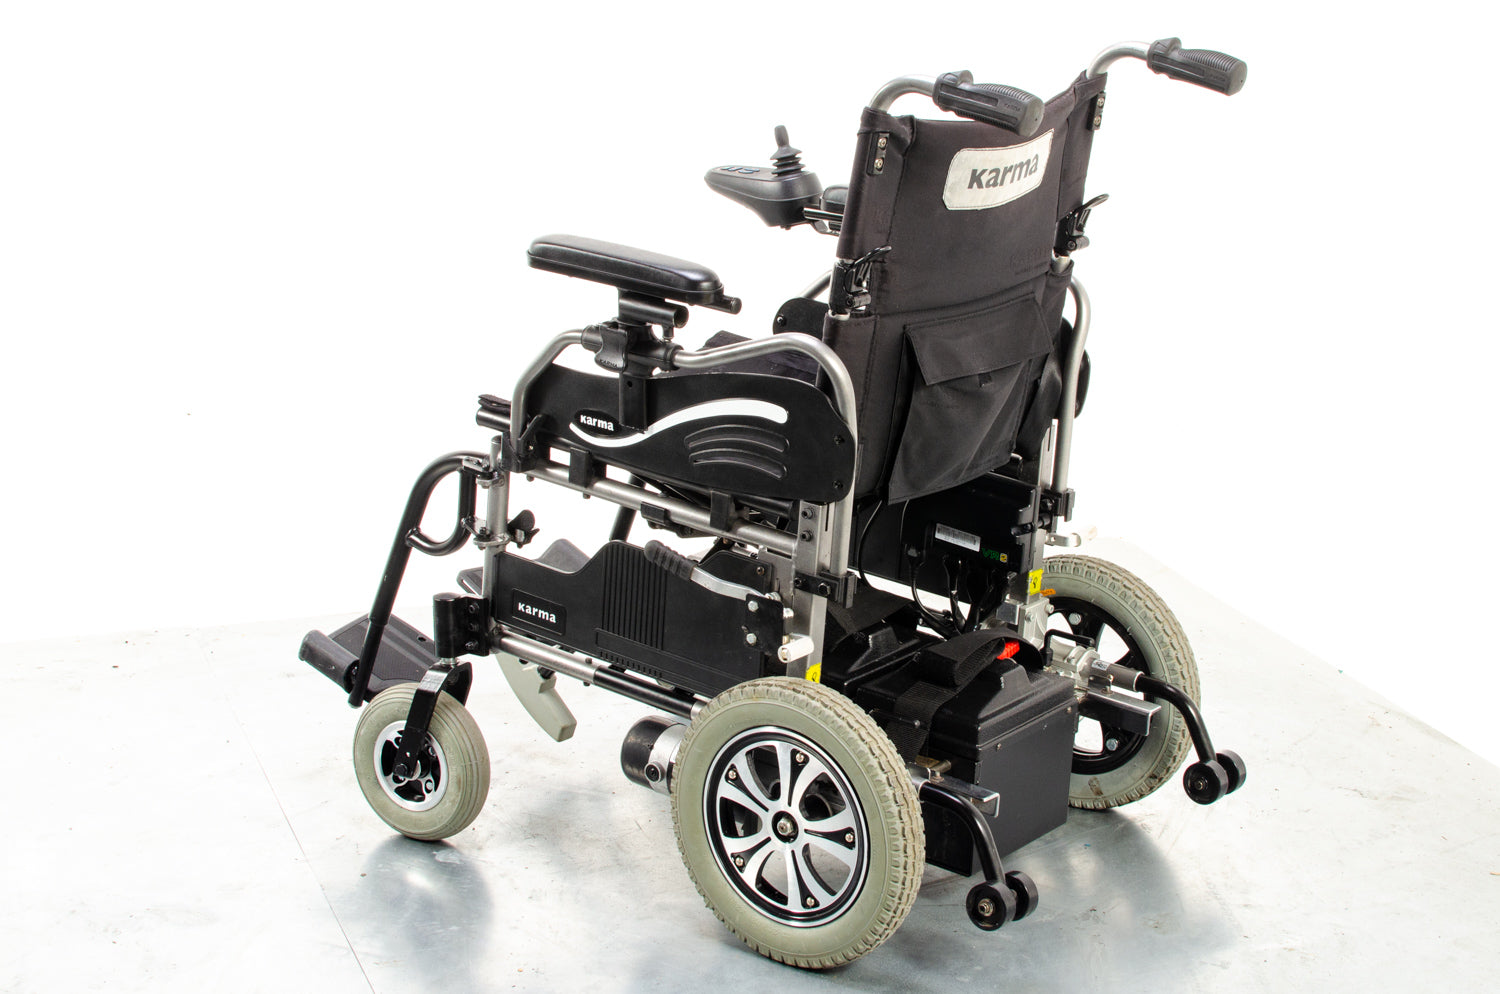 Karma Falcon Transportable Used Electric Wheelchair Powerchair Portable